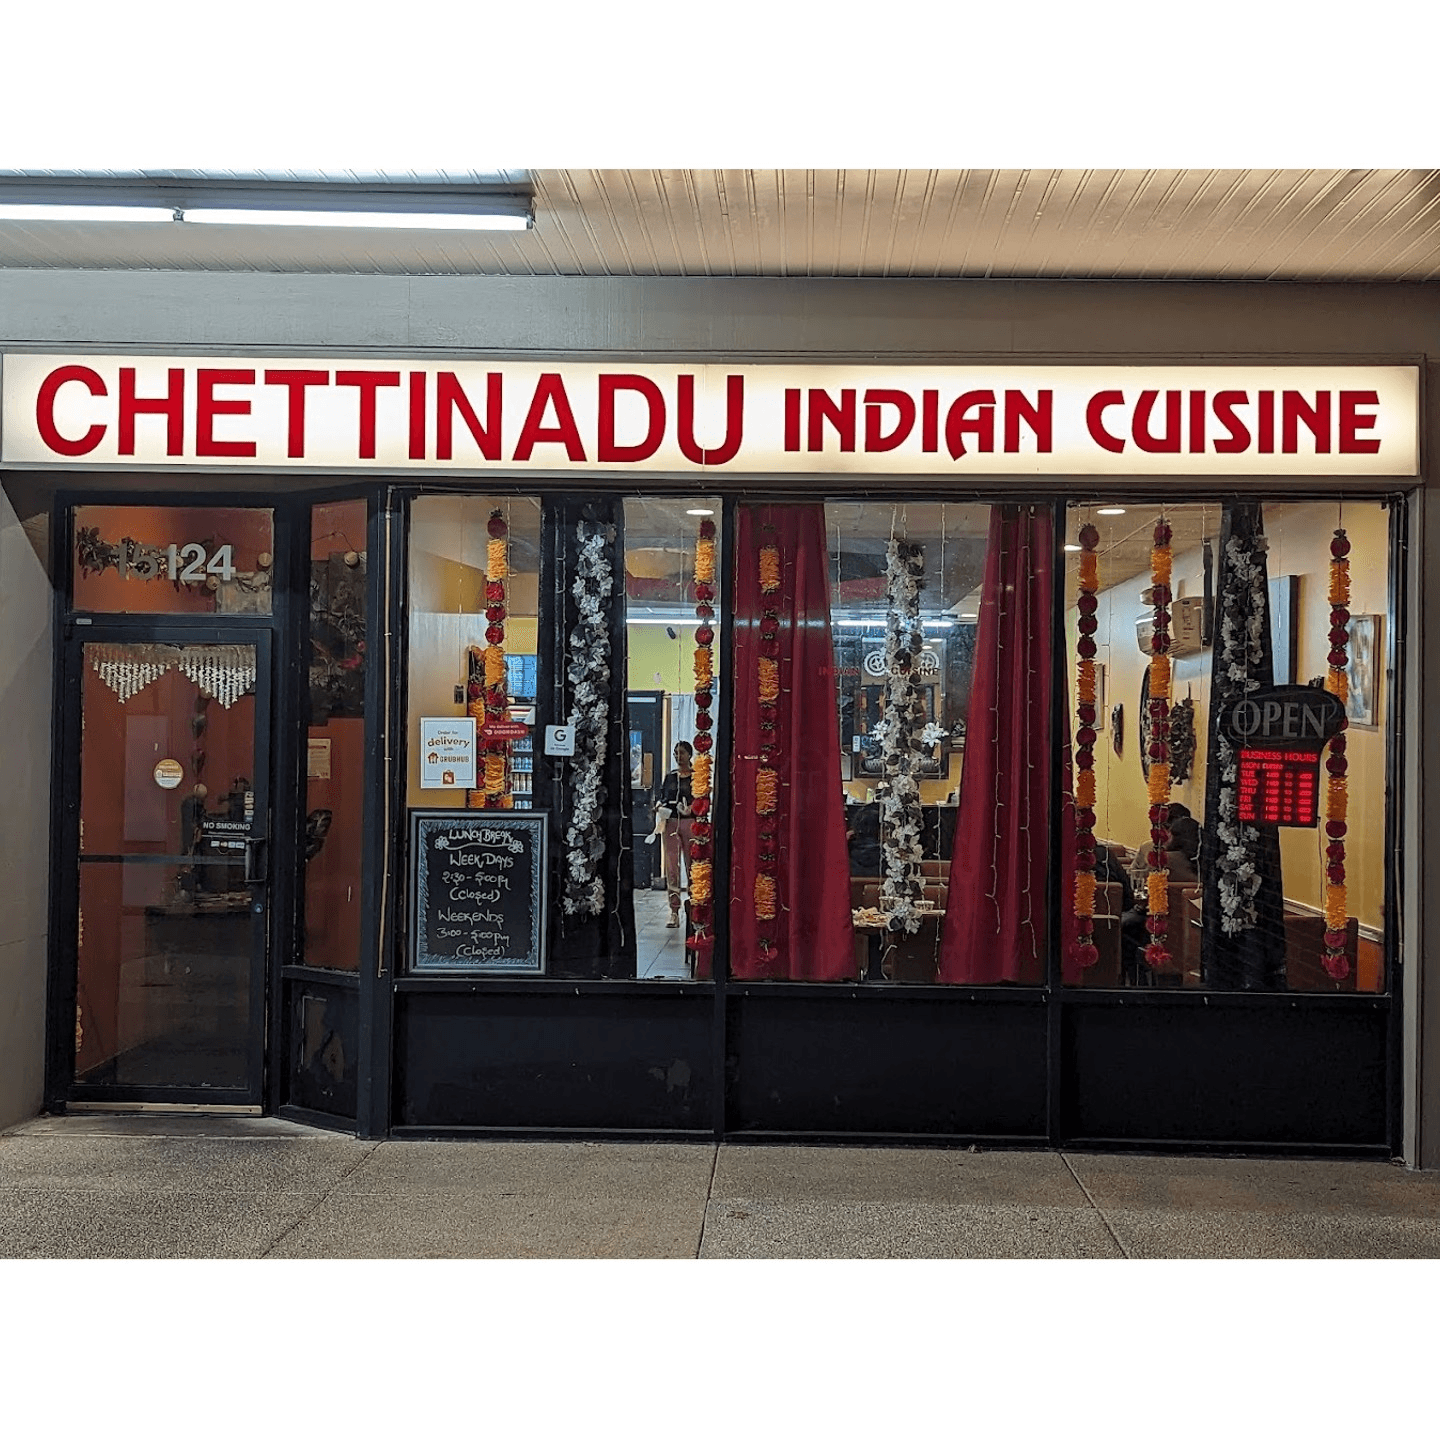 Welcome to Chettinadu Indian Cuisine